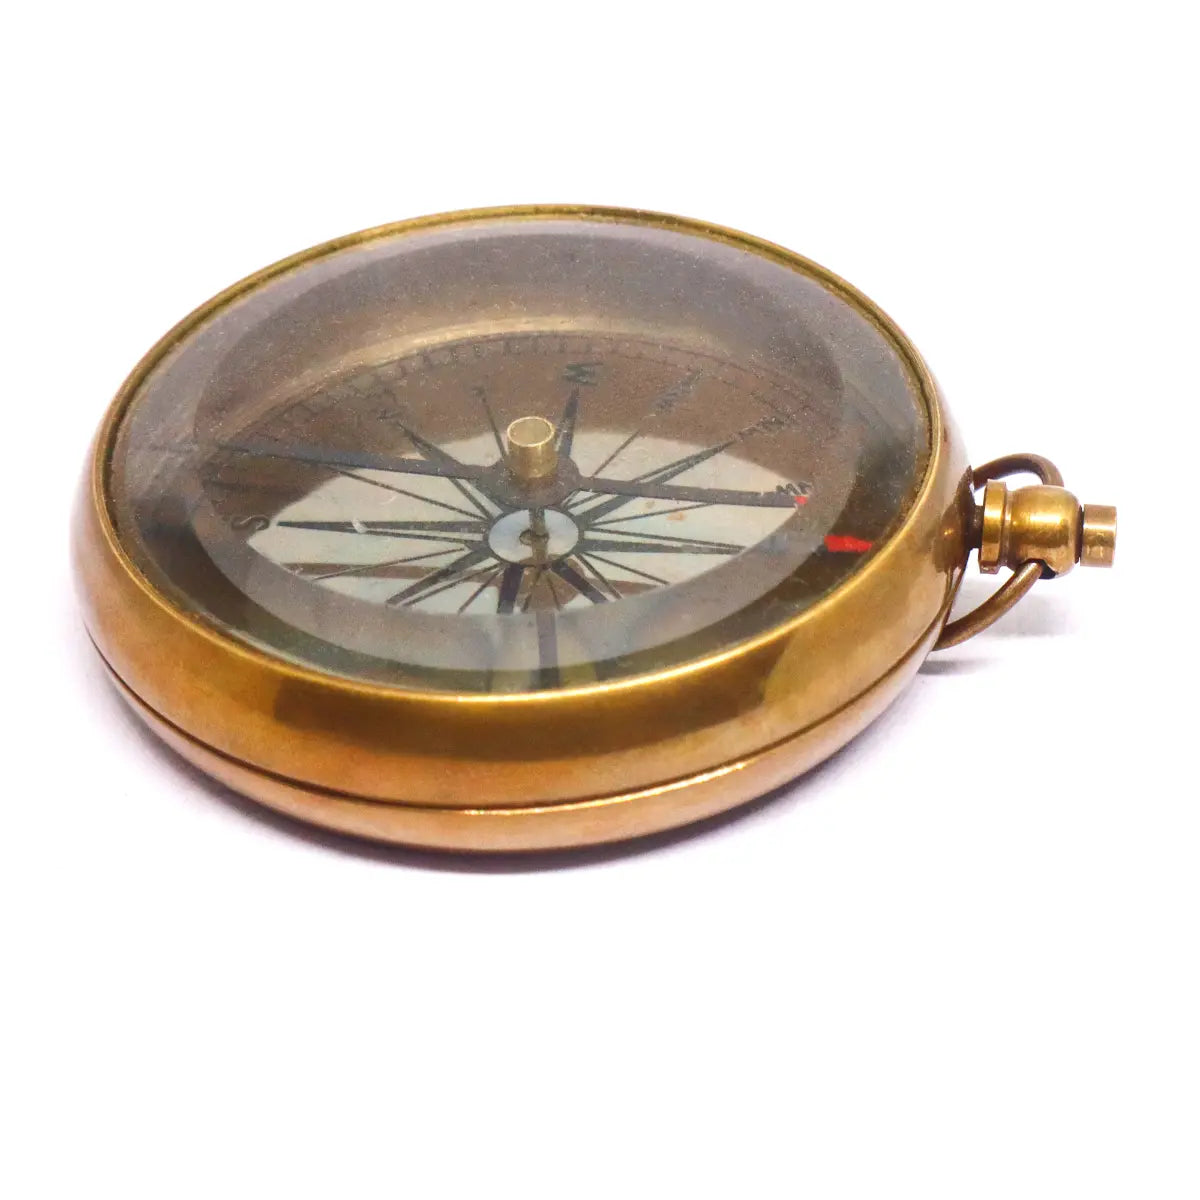 Royal Navy Brass Compass BC112